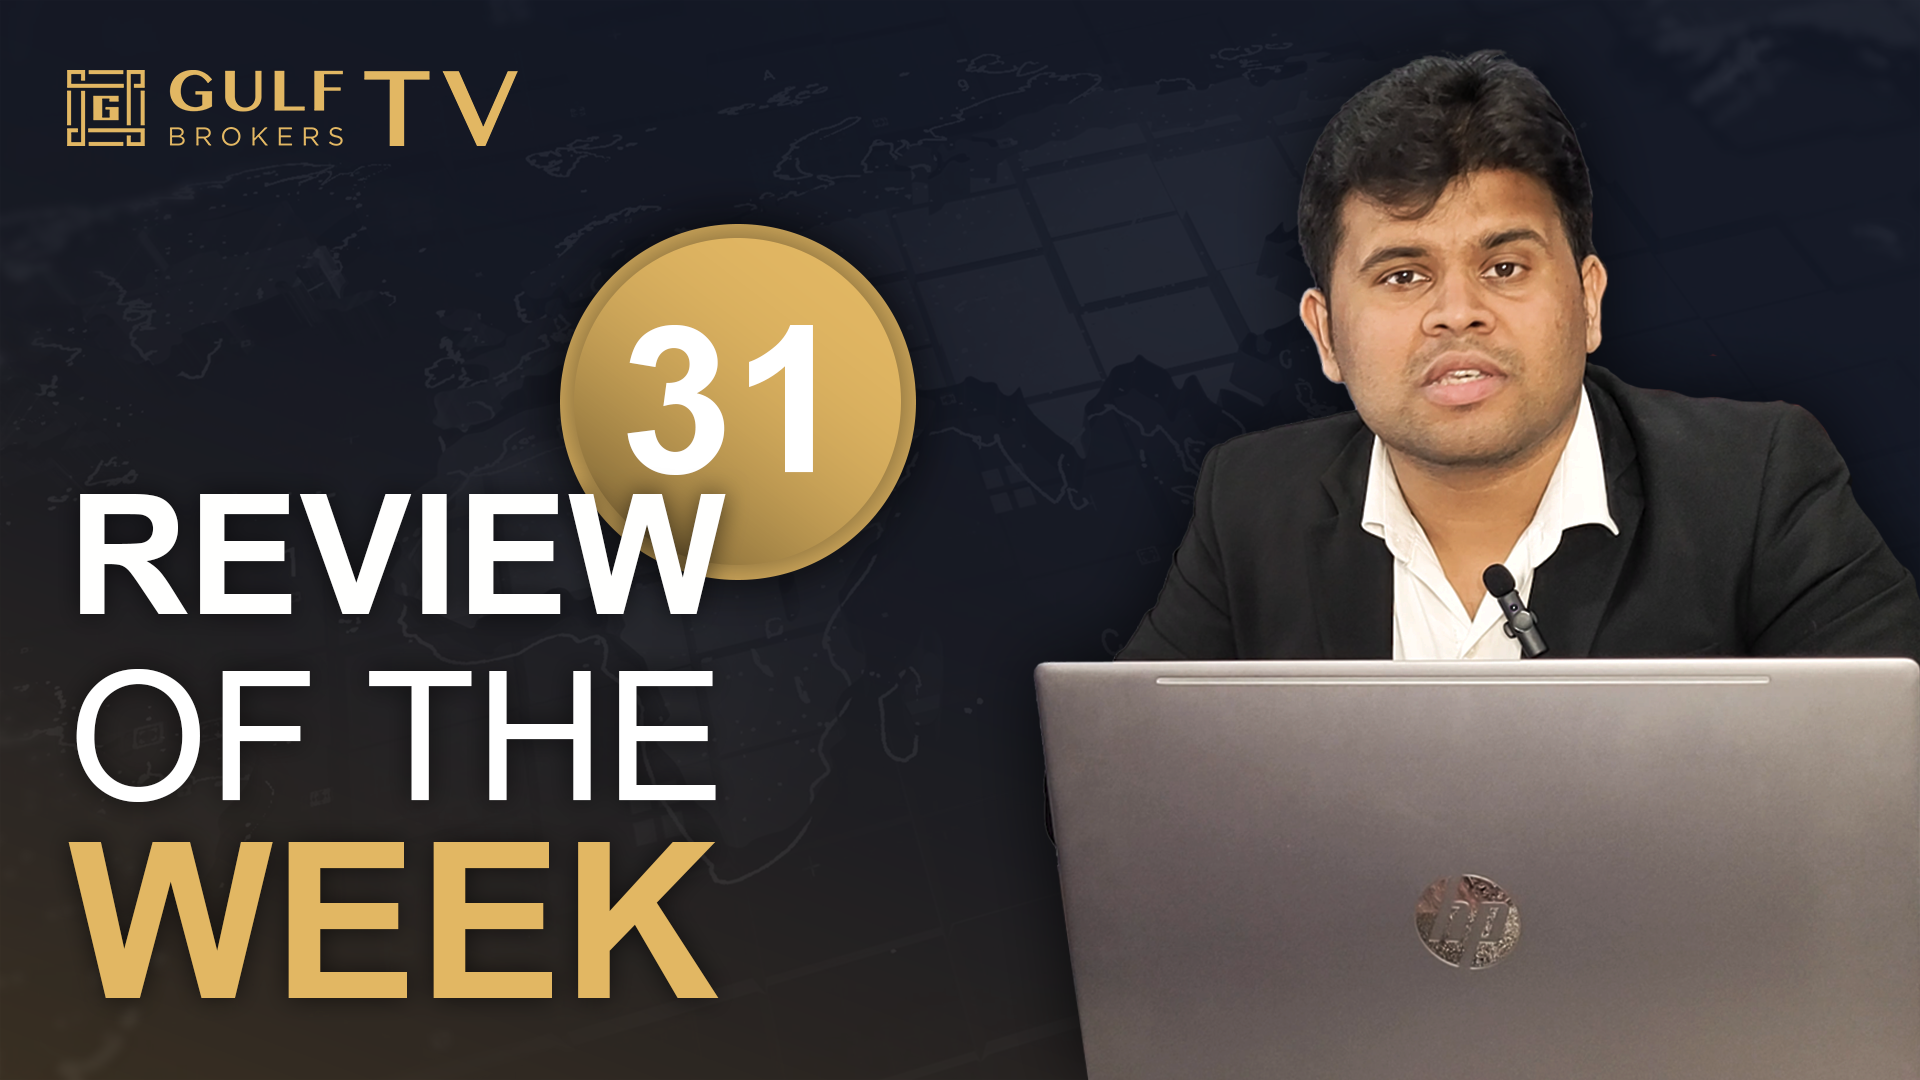 Gulfbrokers | Gulf Brokers | Review of the week 31 | Syam KP